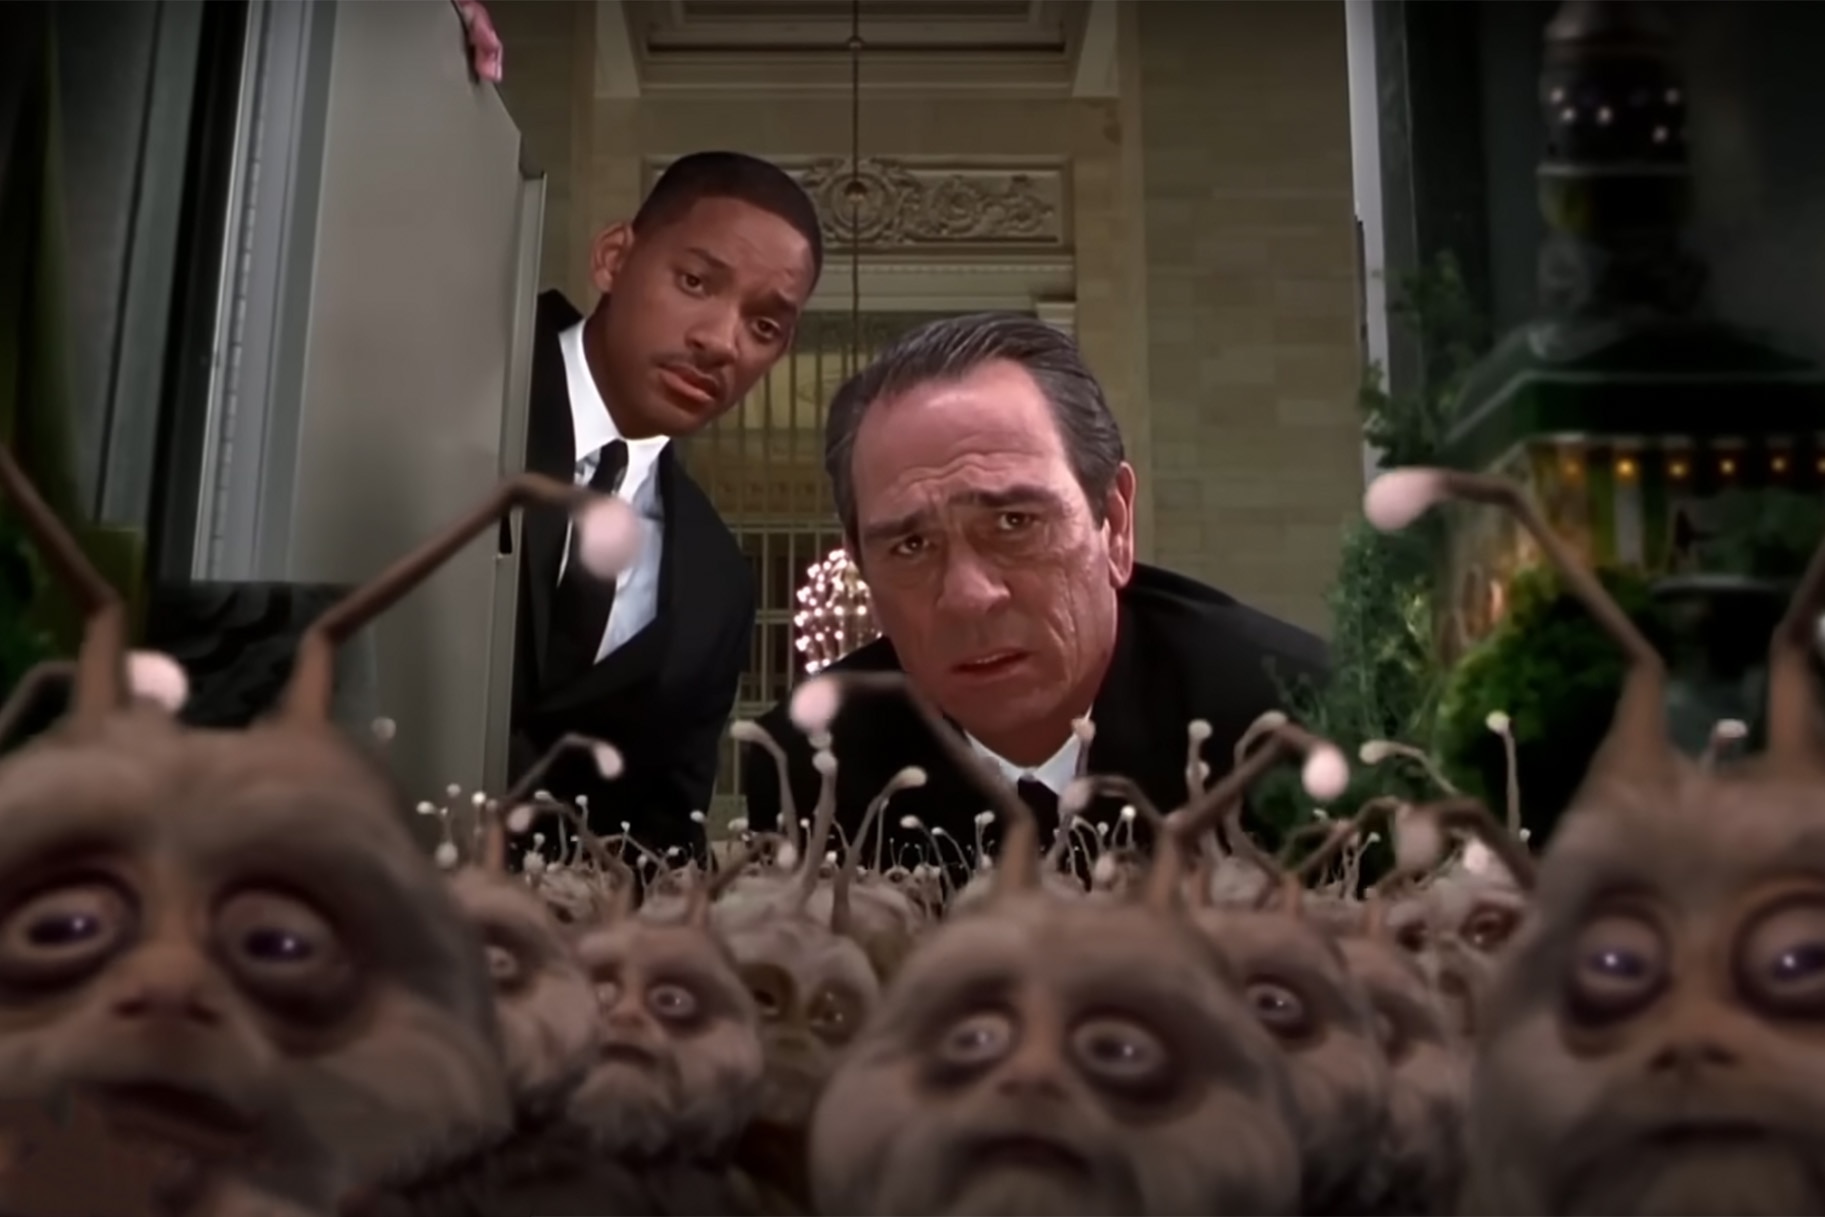 Agents K (Tommy Lee Jones) and J (Will Smith) look at a crowd of aliens in a locker in Men in Black II (2002).